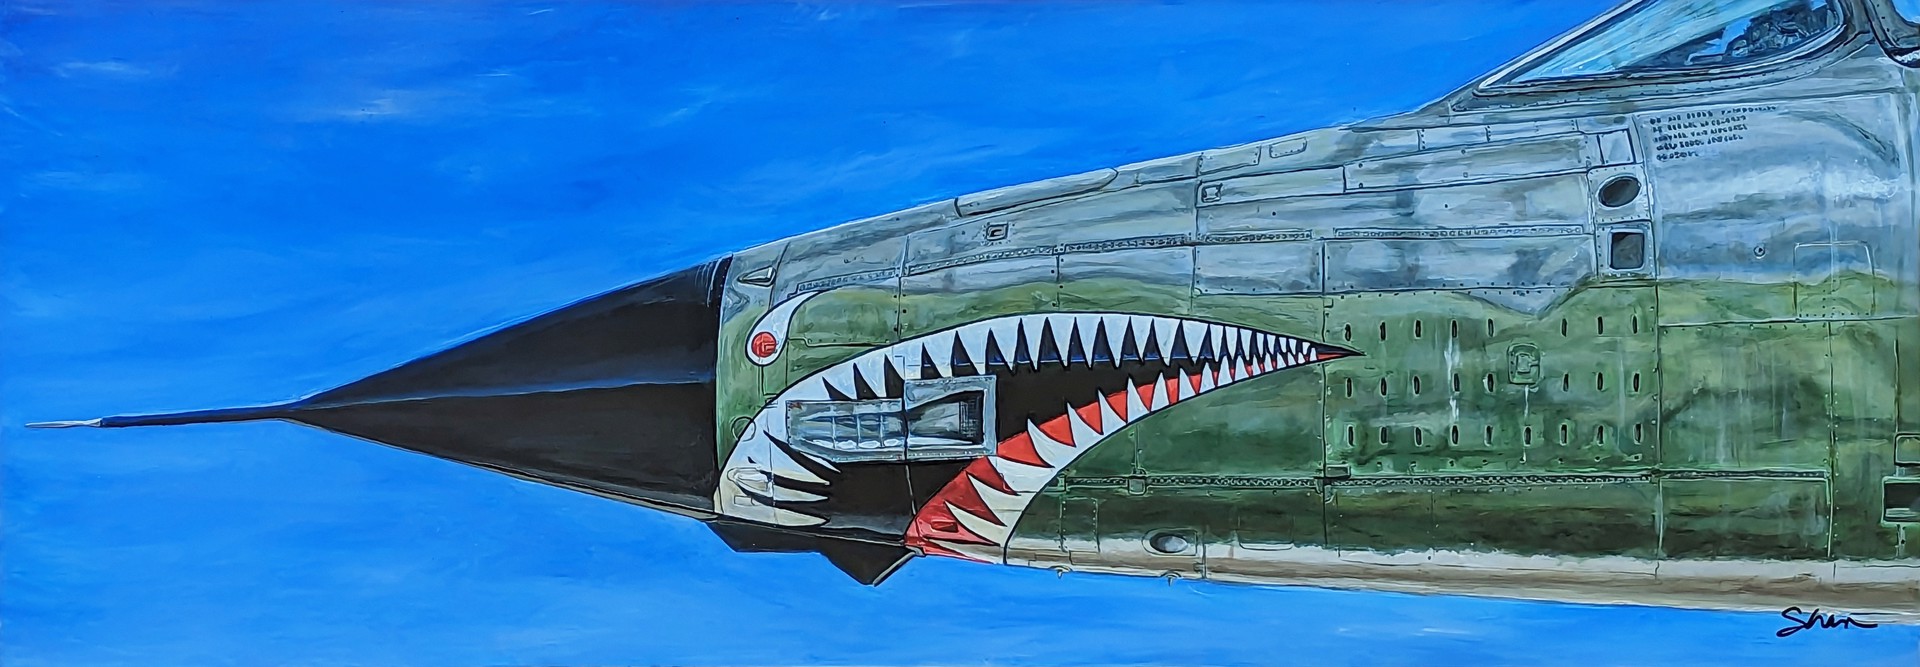 F105G Thunderbird by Shan Fannin